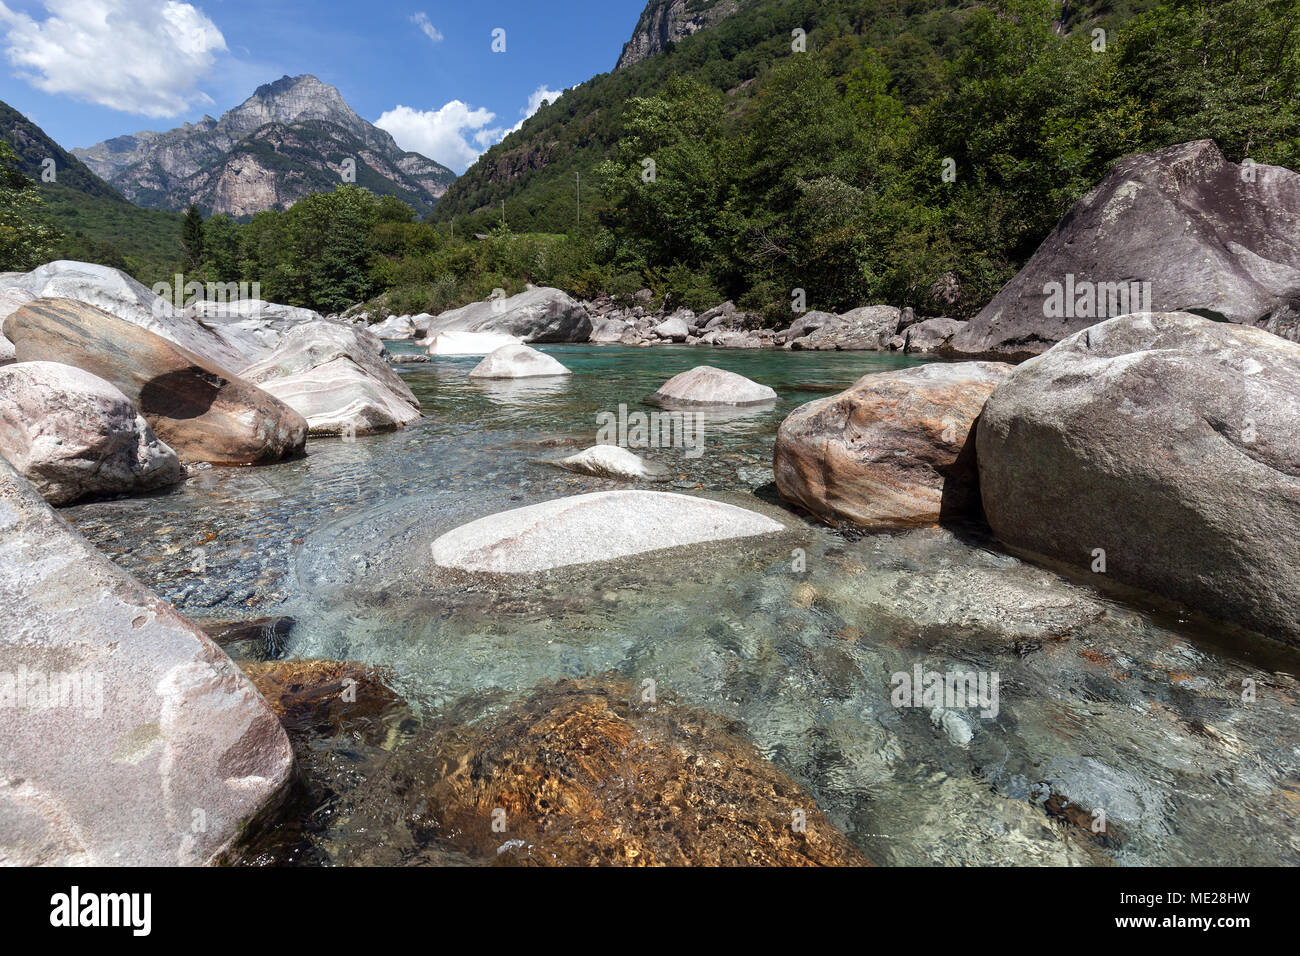 Large stones in the river Verzasca between Lavertezzo and Brione, Verzasca Valley, Valle Verzasca, Canton Ticino, Switzerland Stock Photo